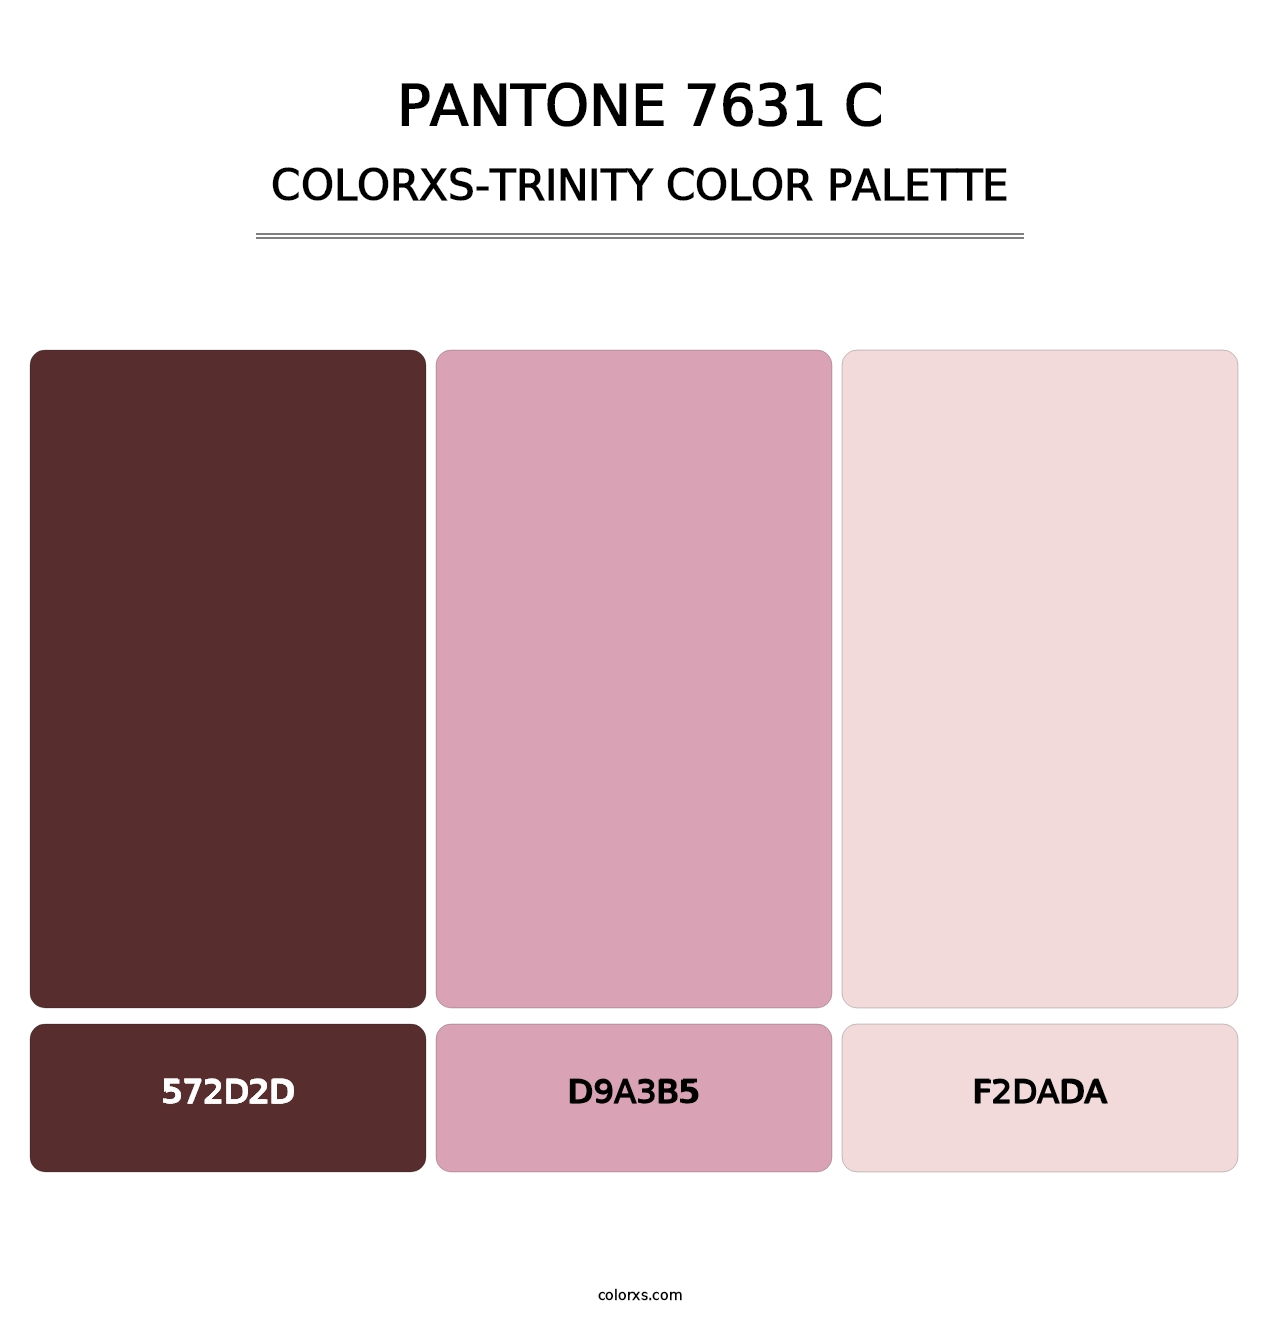 PANTONE 7631 C - Colorxs Trinity Palette